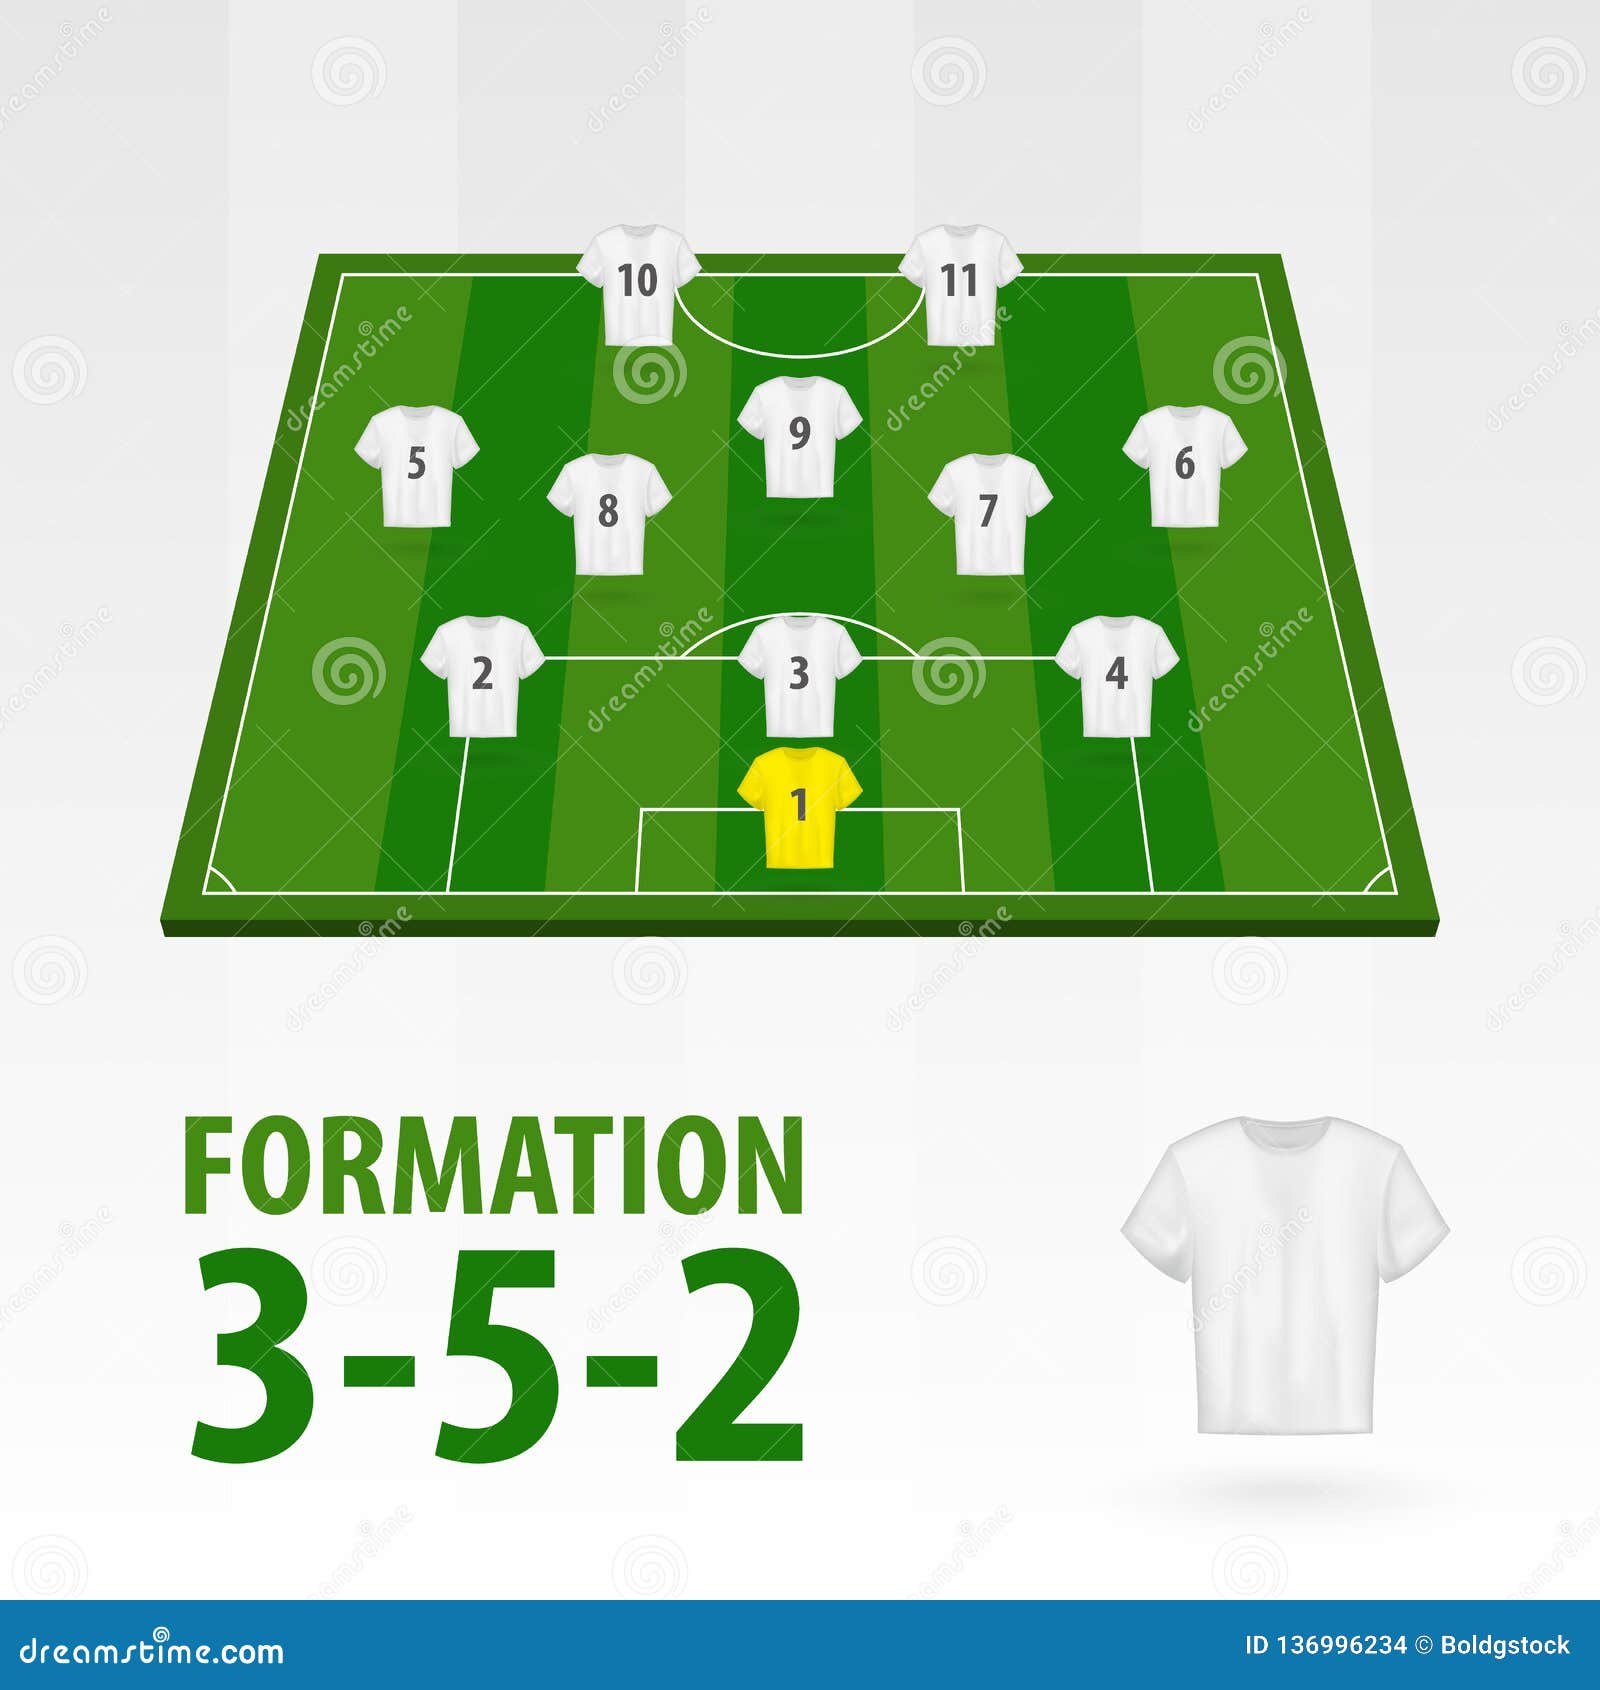 Football Players Lineups Formation 3 5 2 Soccer Half Stadium Stock Vector Illustration Of Championship Player